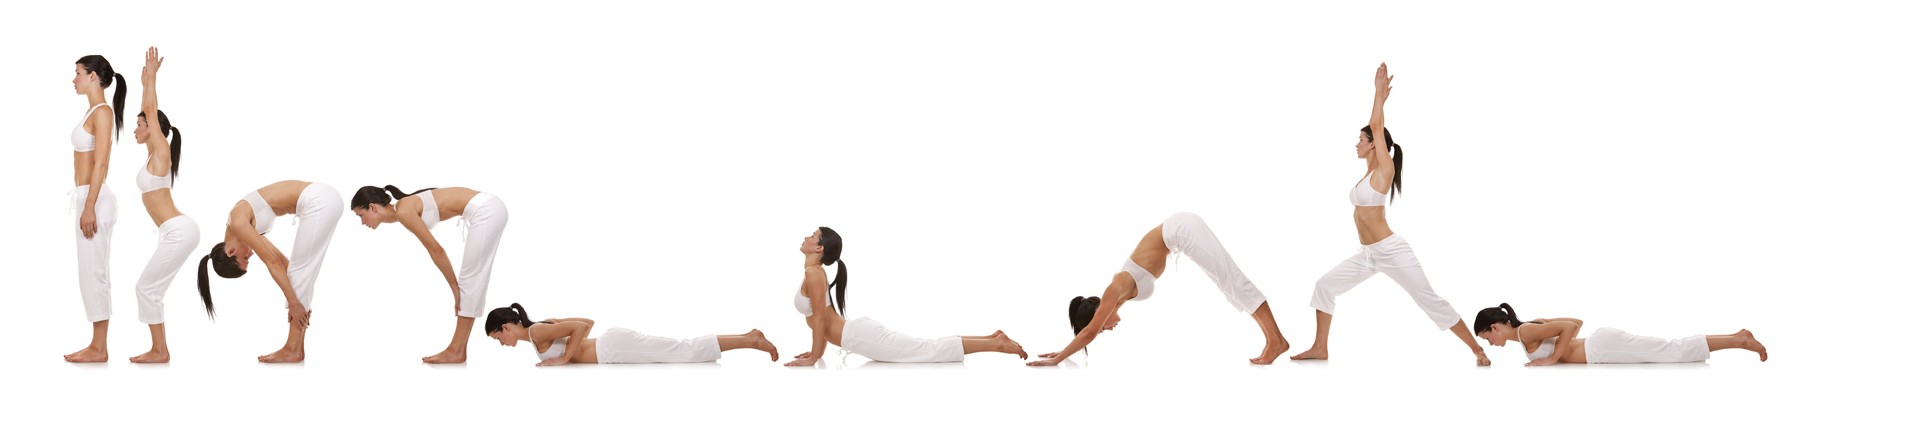 yoga sequence